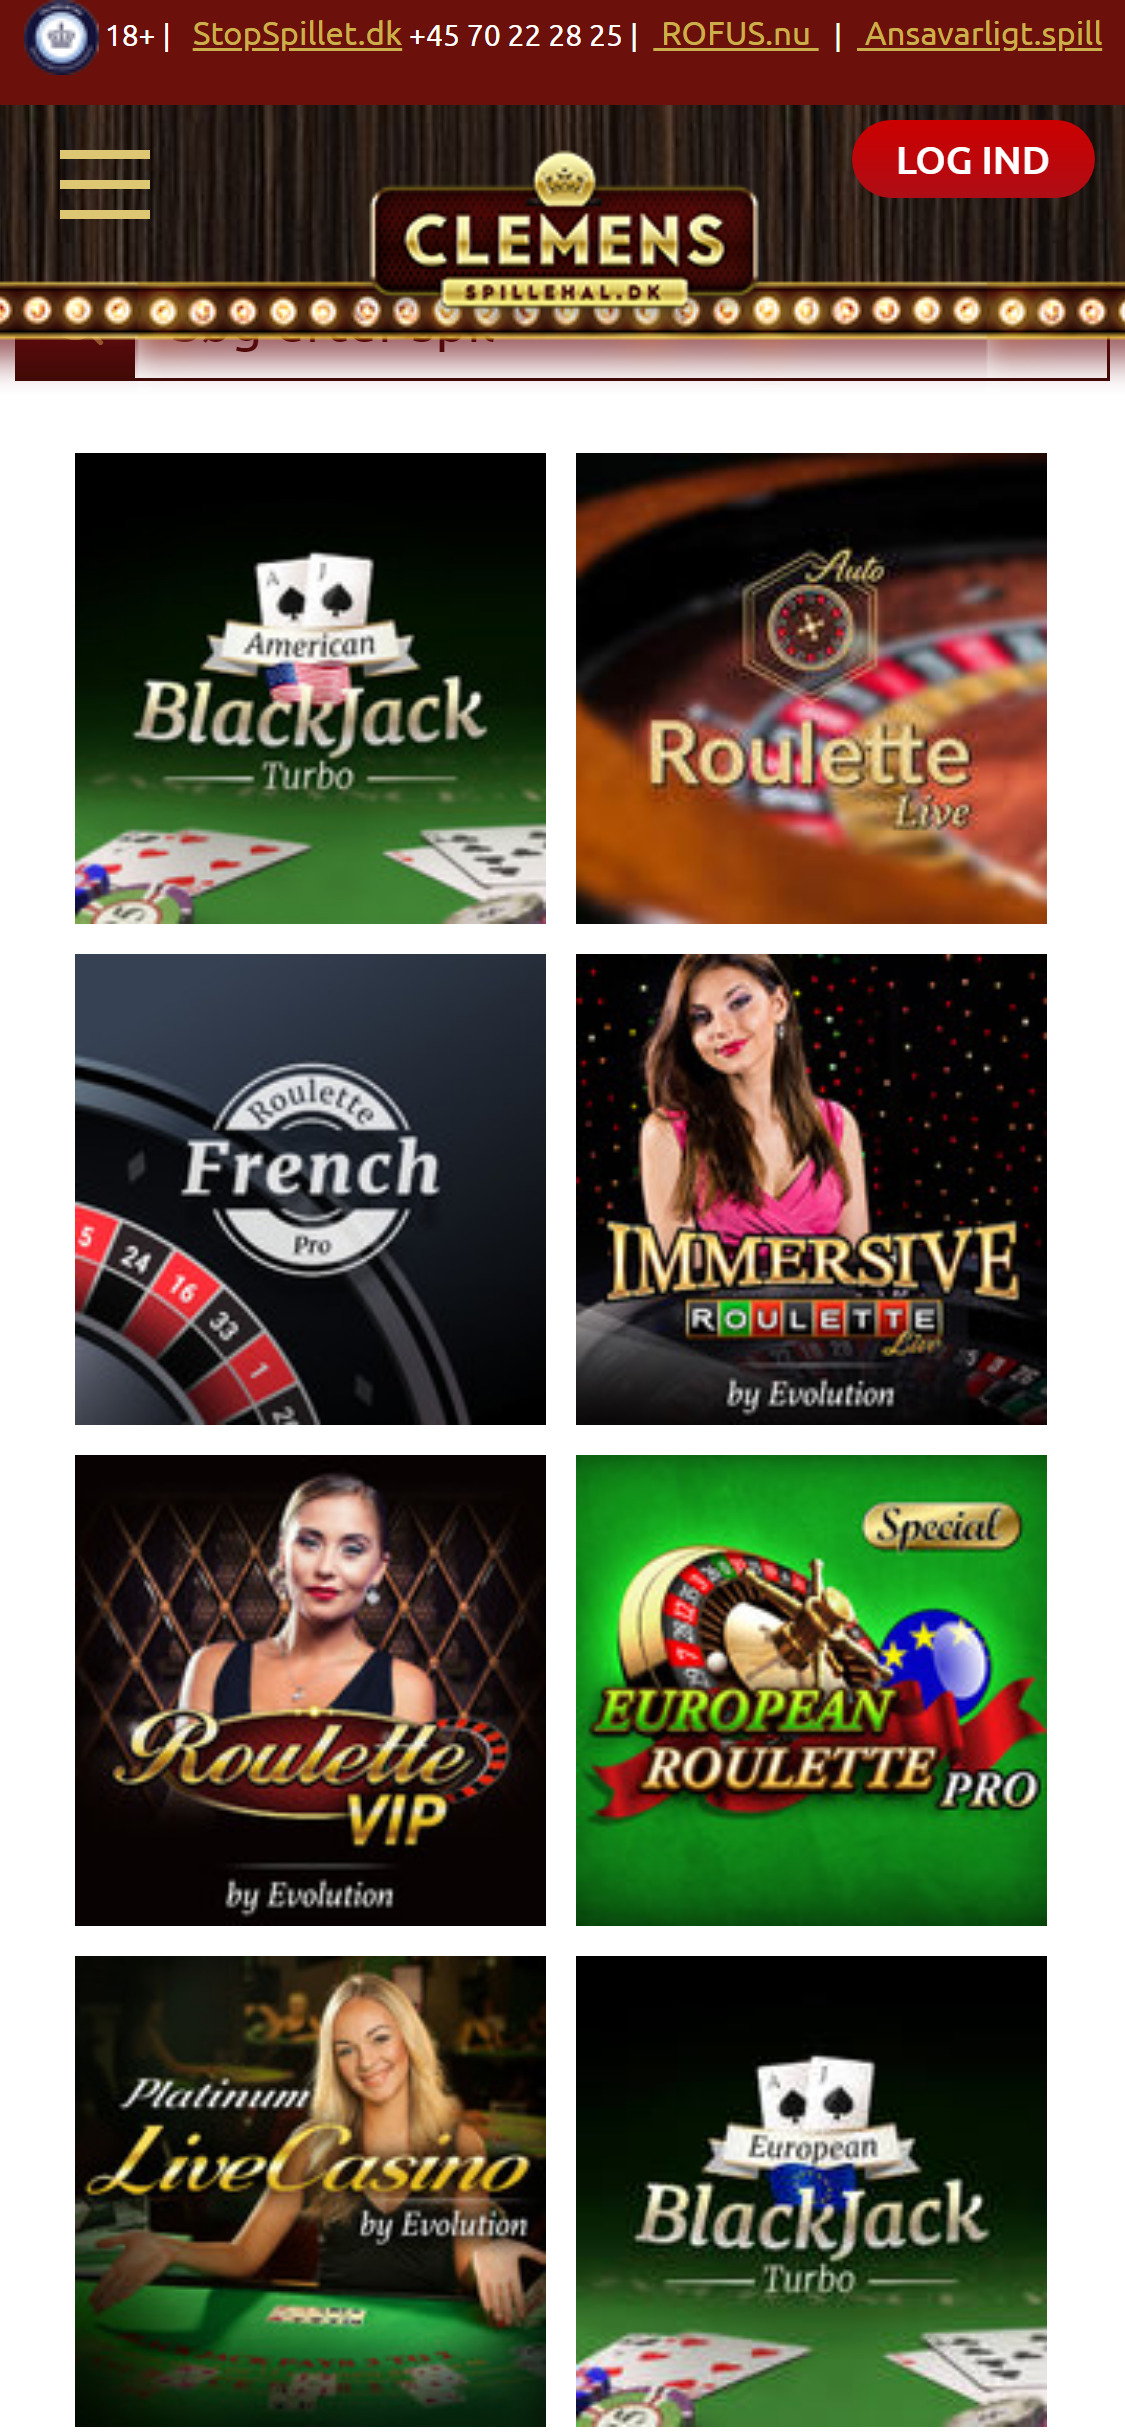 Clemens Spillehal DK Casino Mobile Live Dealer Games Review